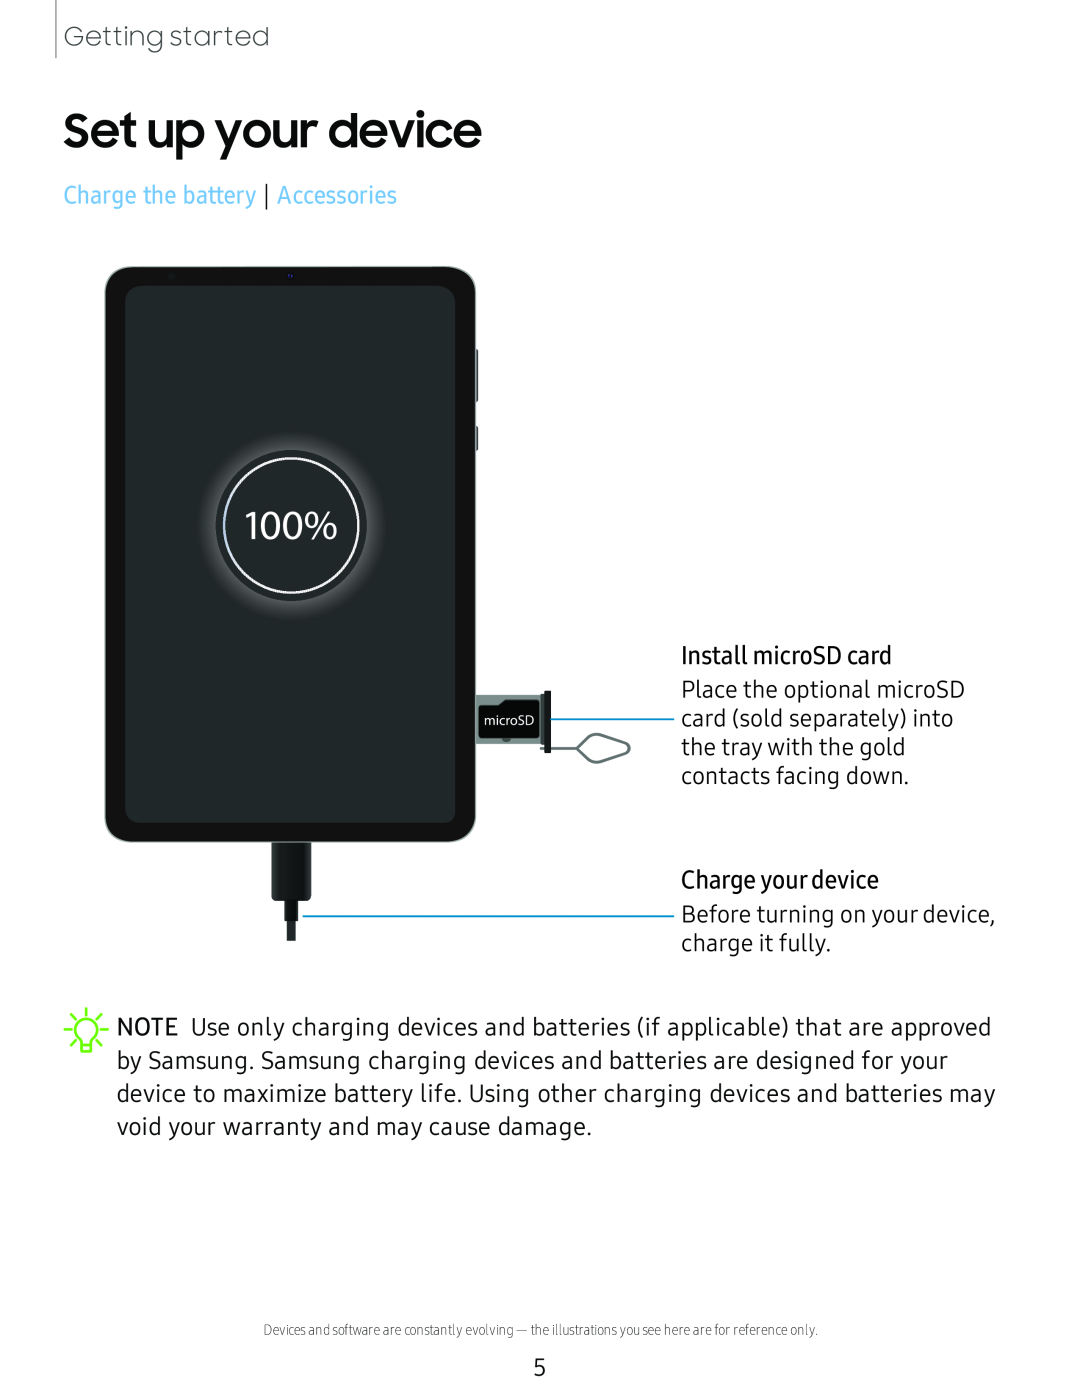 Install microSD card Galaxy Tab S6 Lite 2022